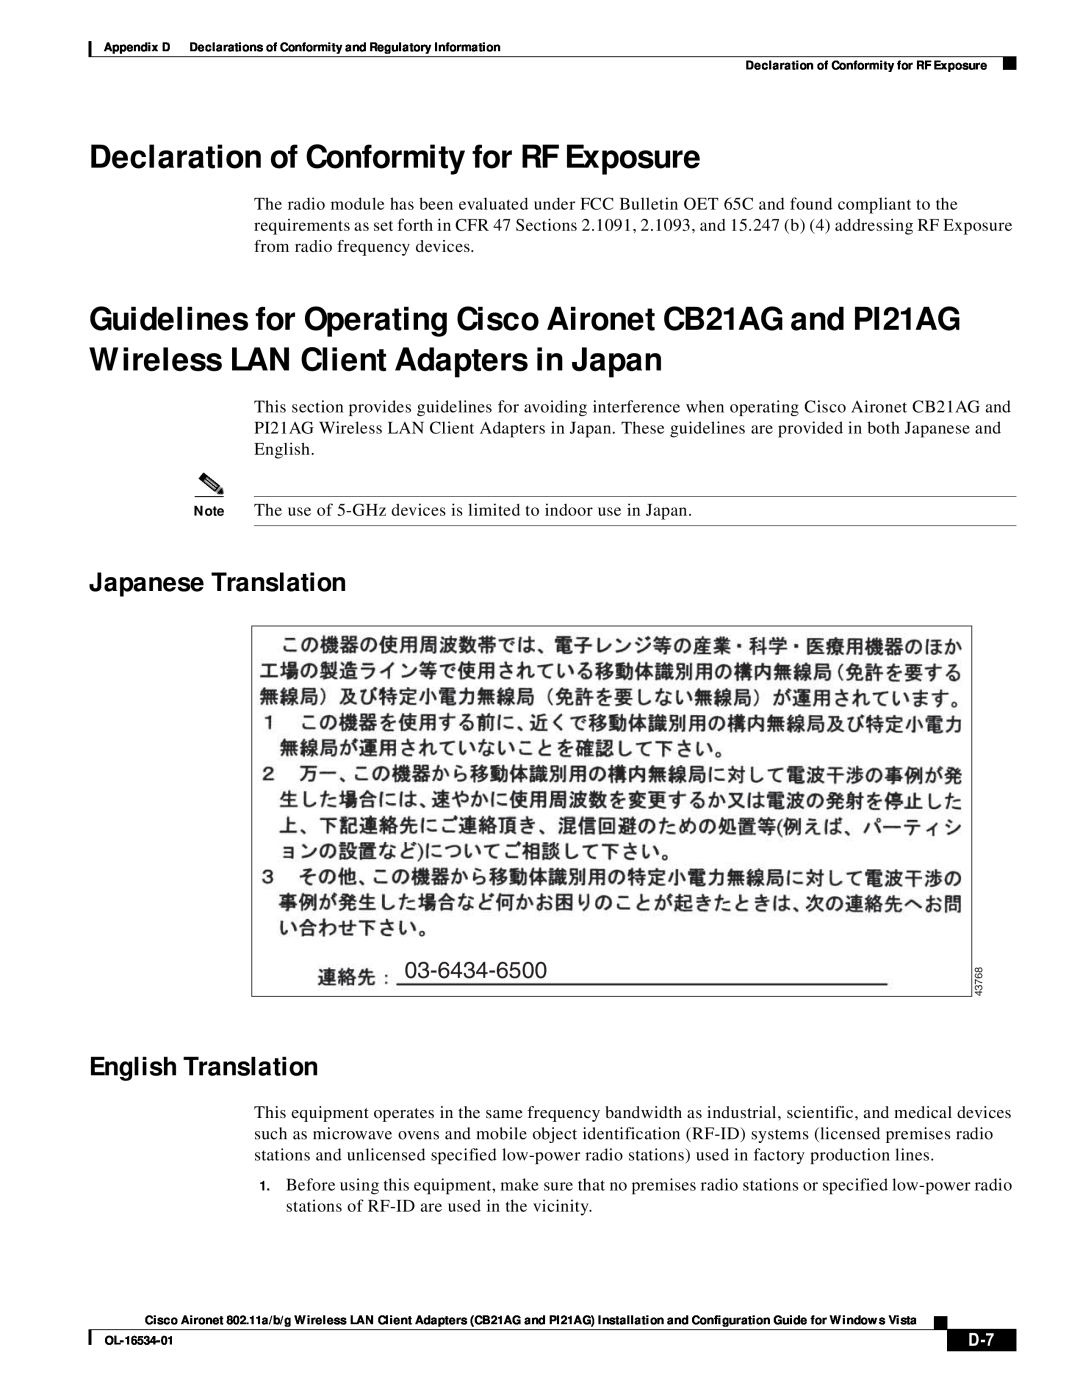 Cisco Systems CB21AG Declaration of Conformity for RF Exposure, Japanese Translation, English Translation, 03-6434-6500 